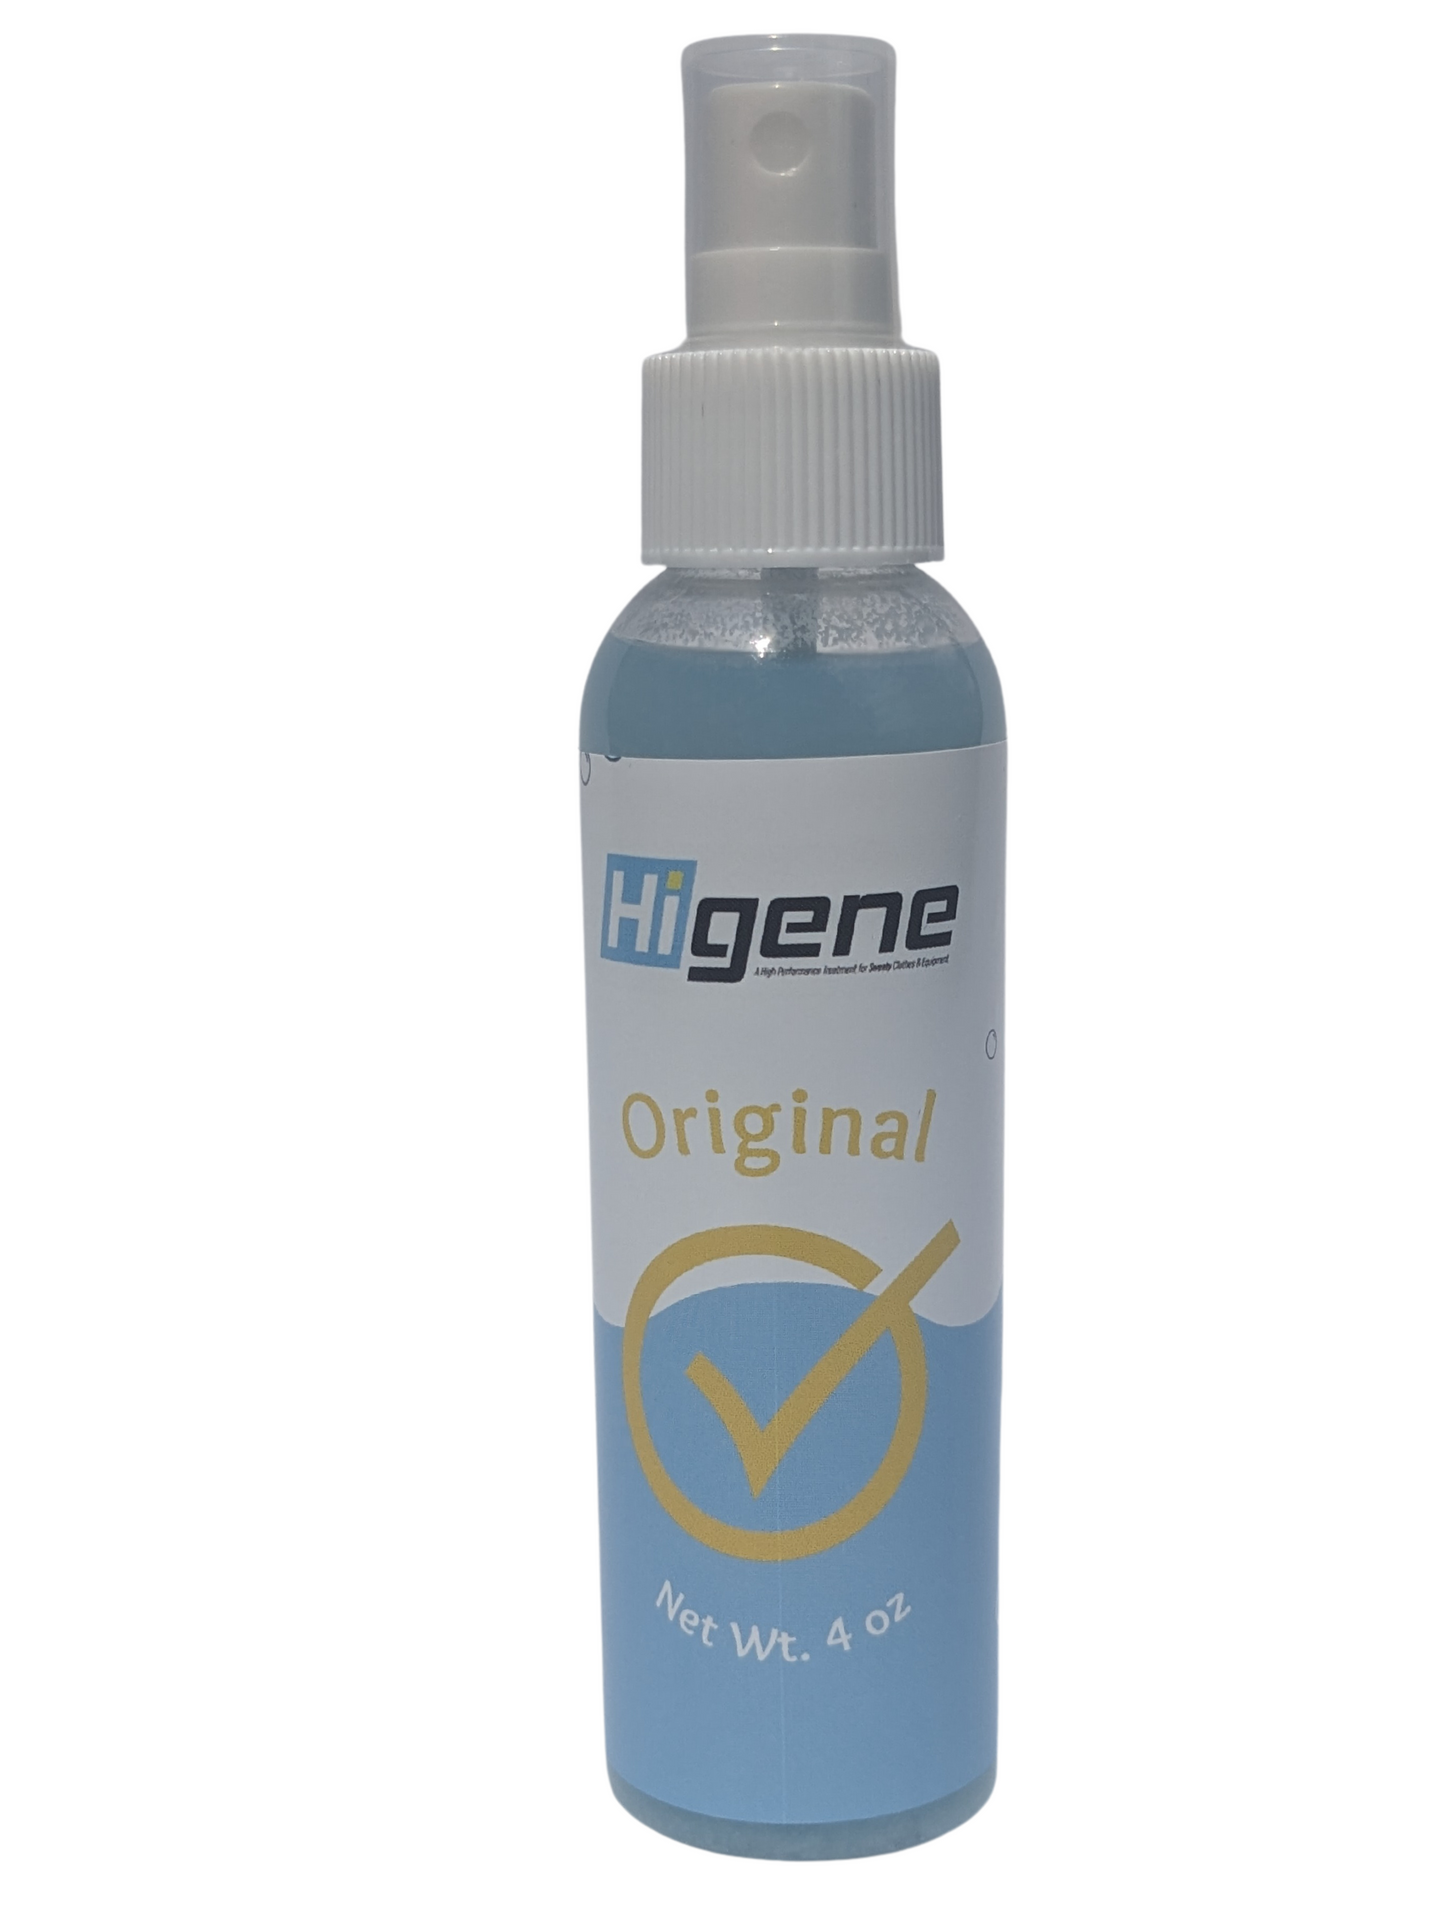 Higene - Original Scent laundry spray